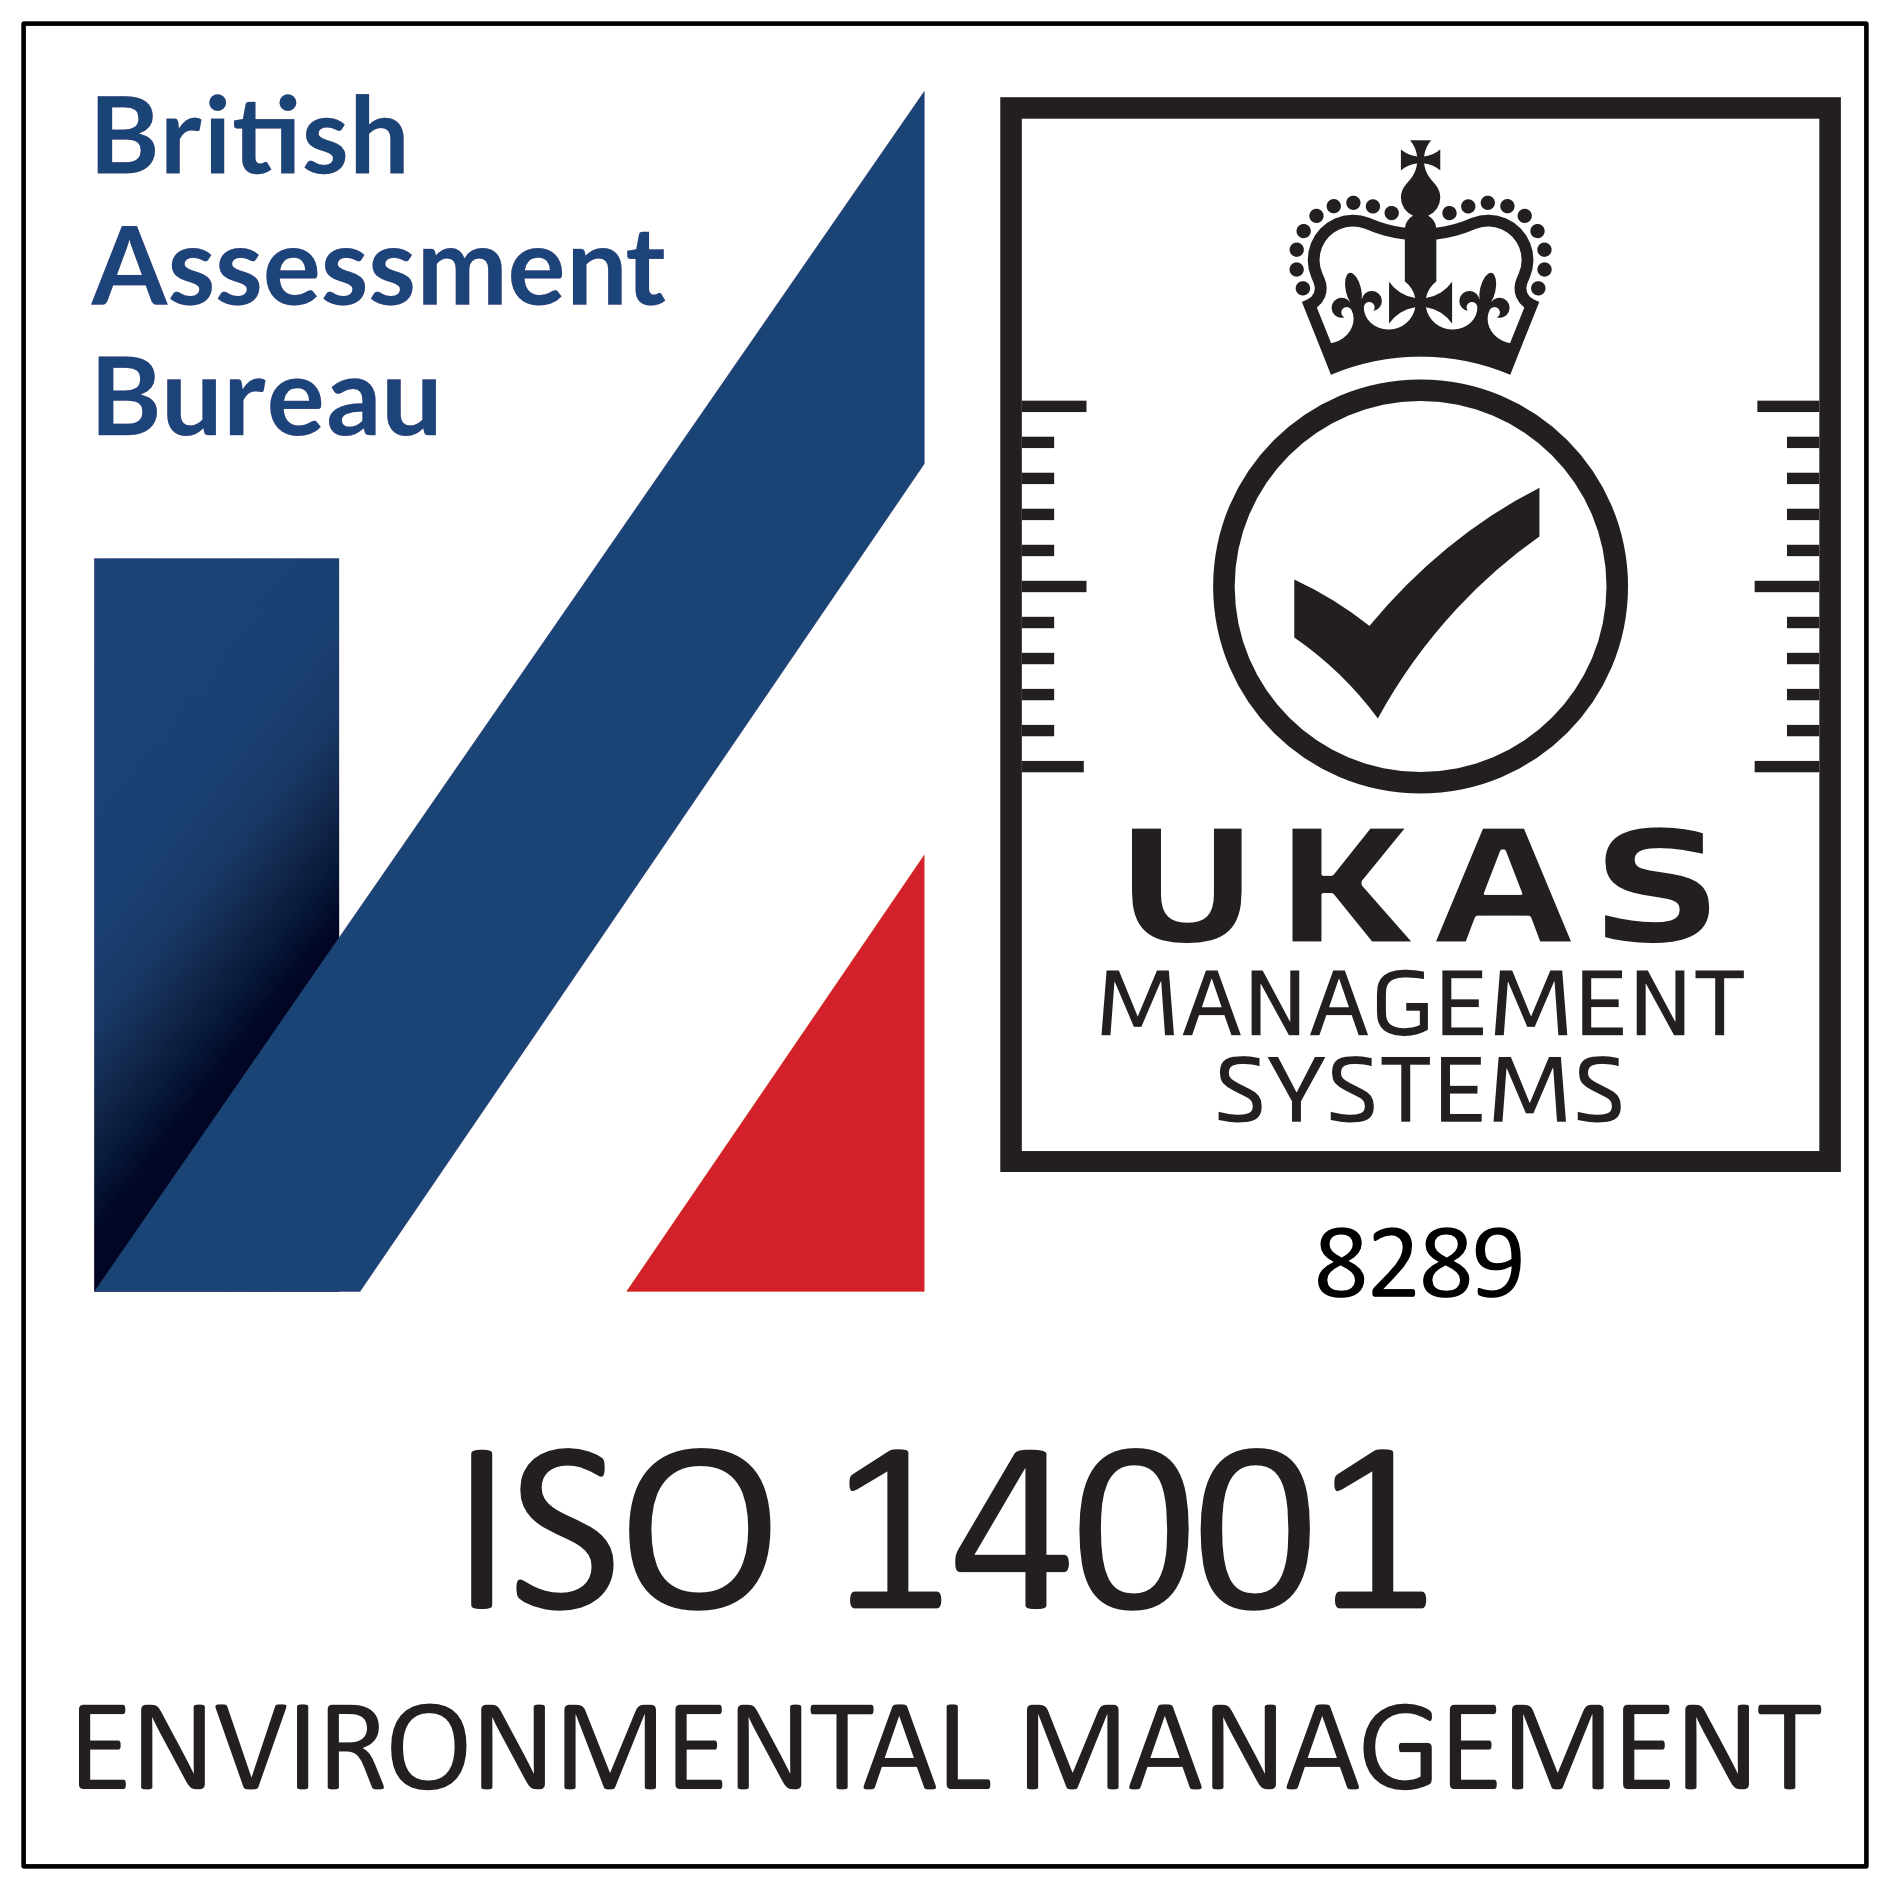 British Assessment Bureau badge 14001 Environmental Management